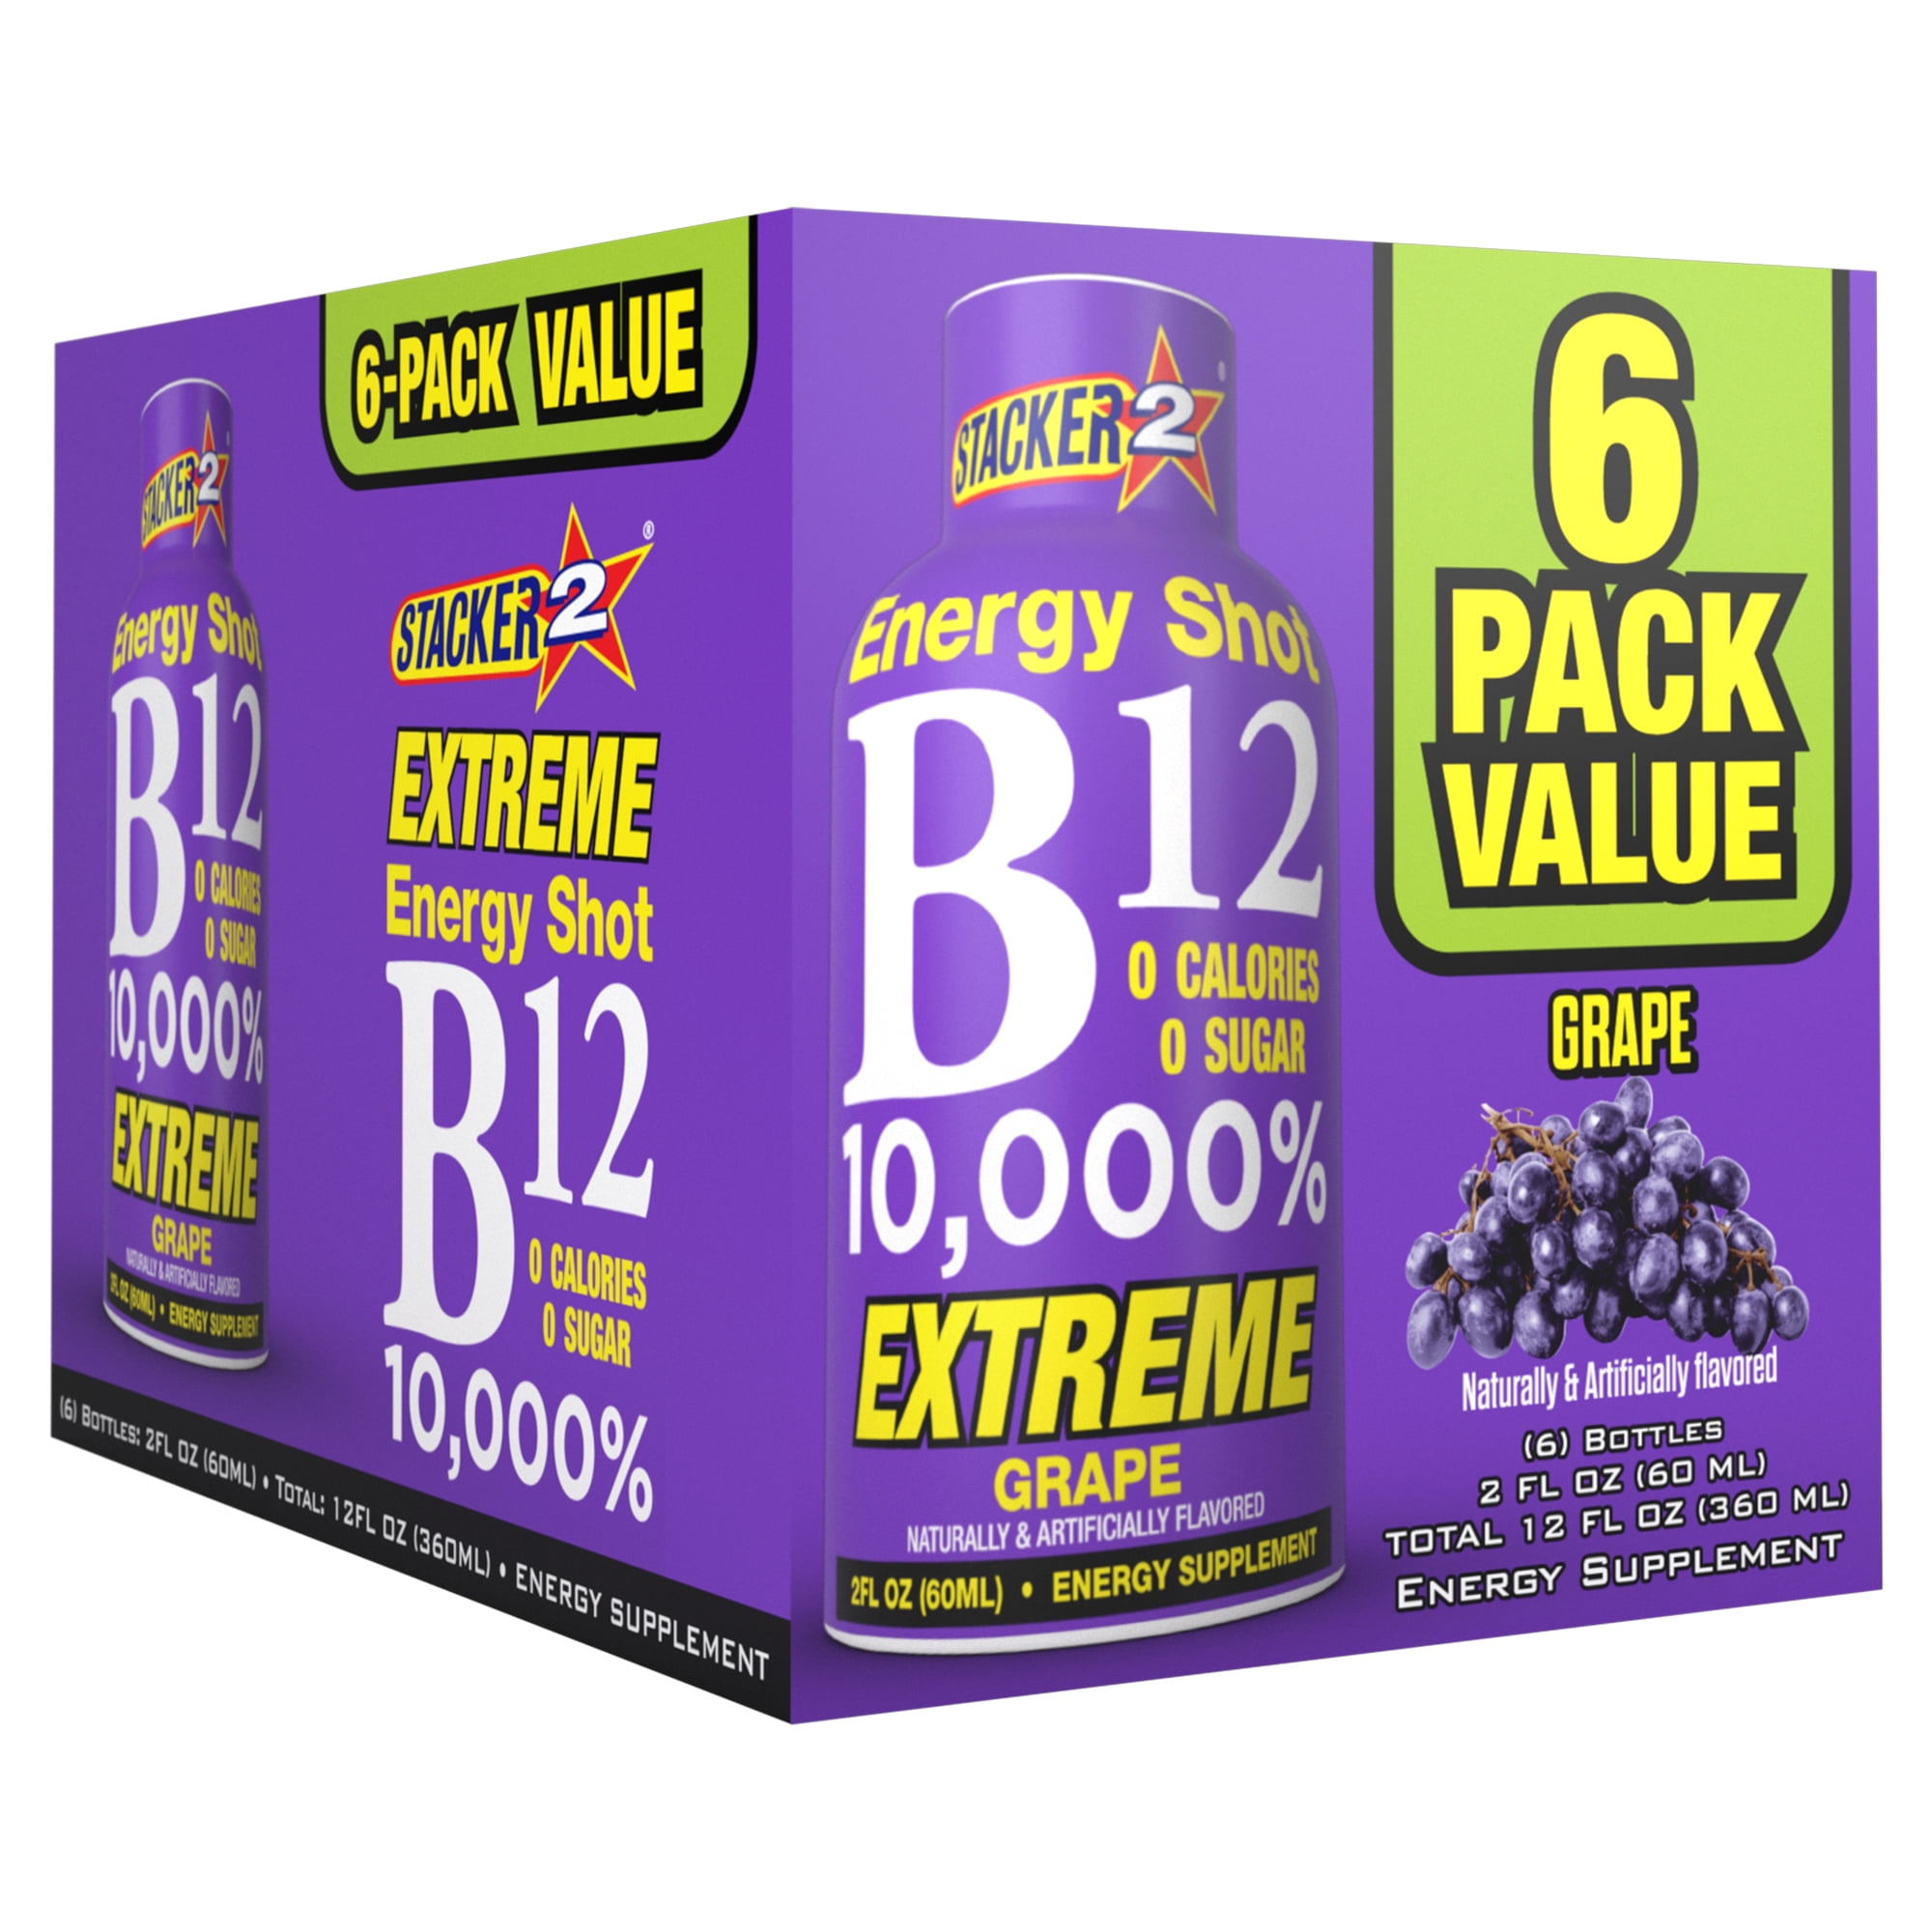 Stacker 2 B12 10,000% Energy Shot Grape, 2 fl oz, 6 count